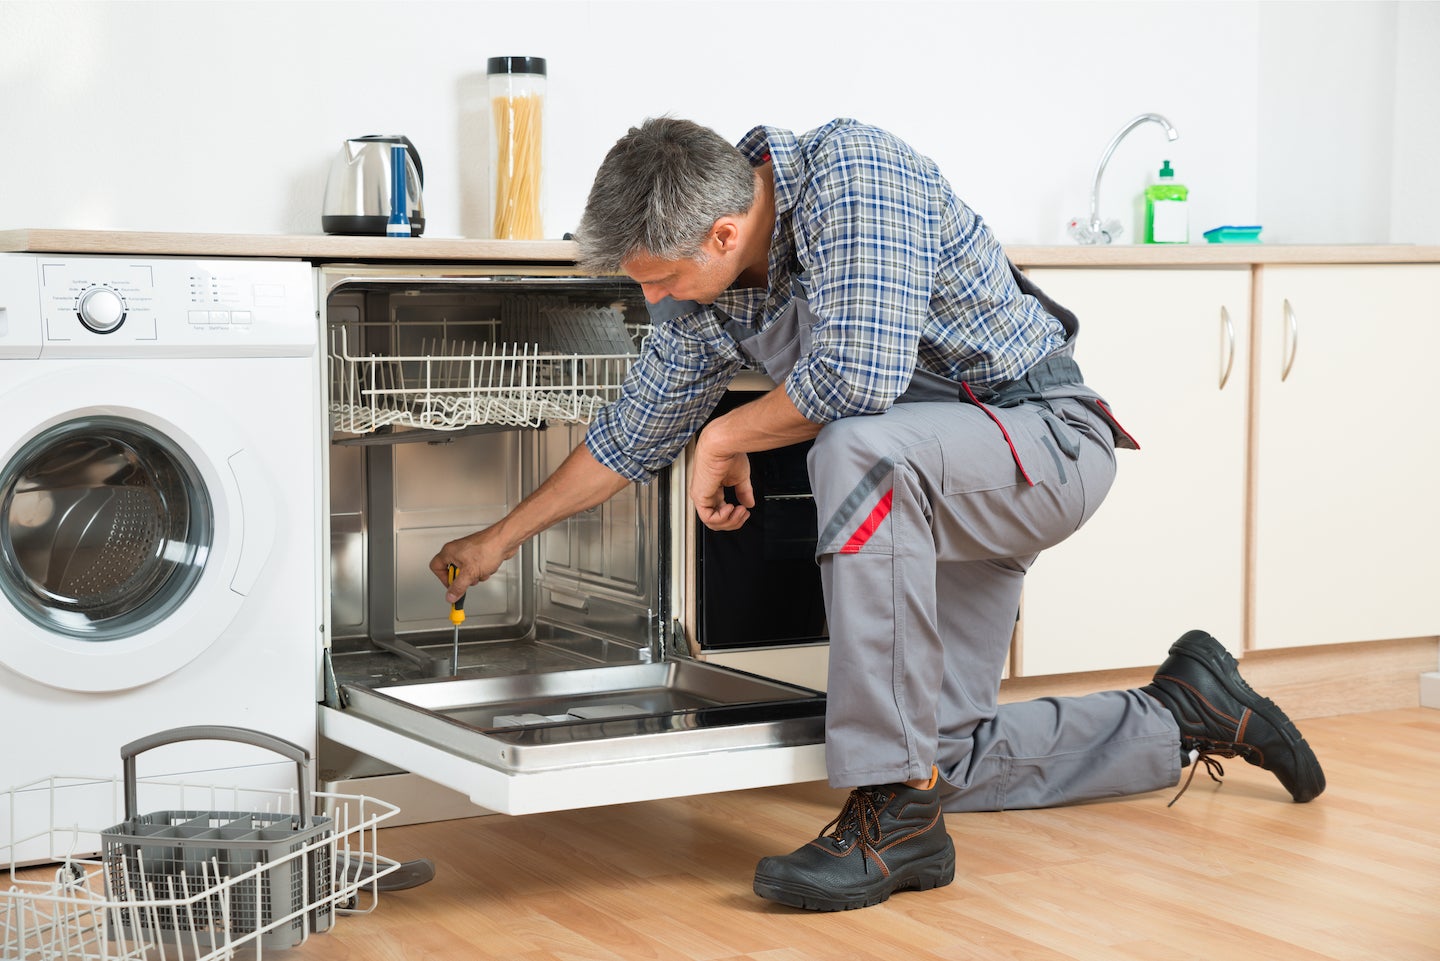 Repairman reviews dishwasher repairs with Dallas couple.